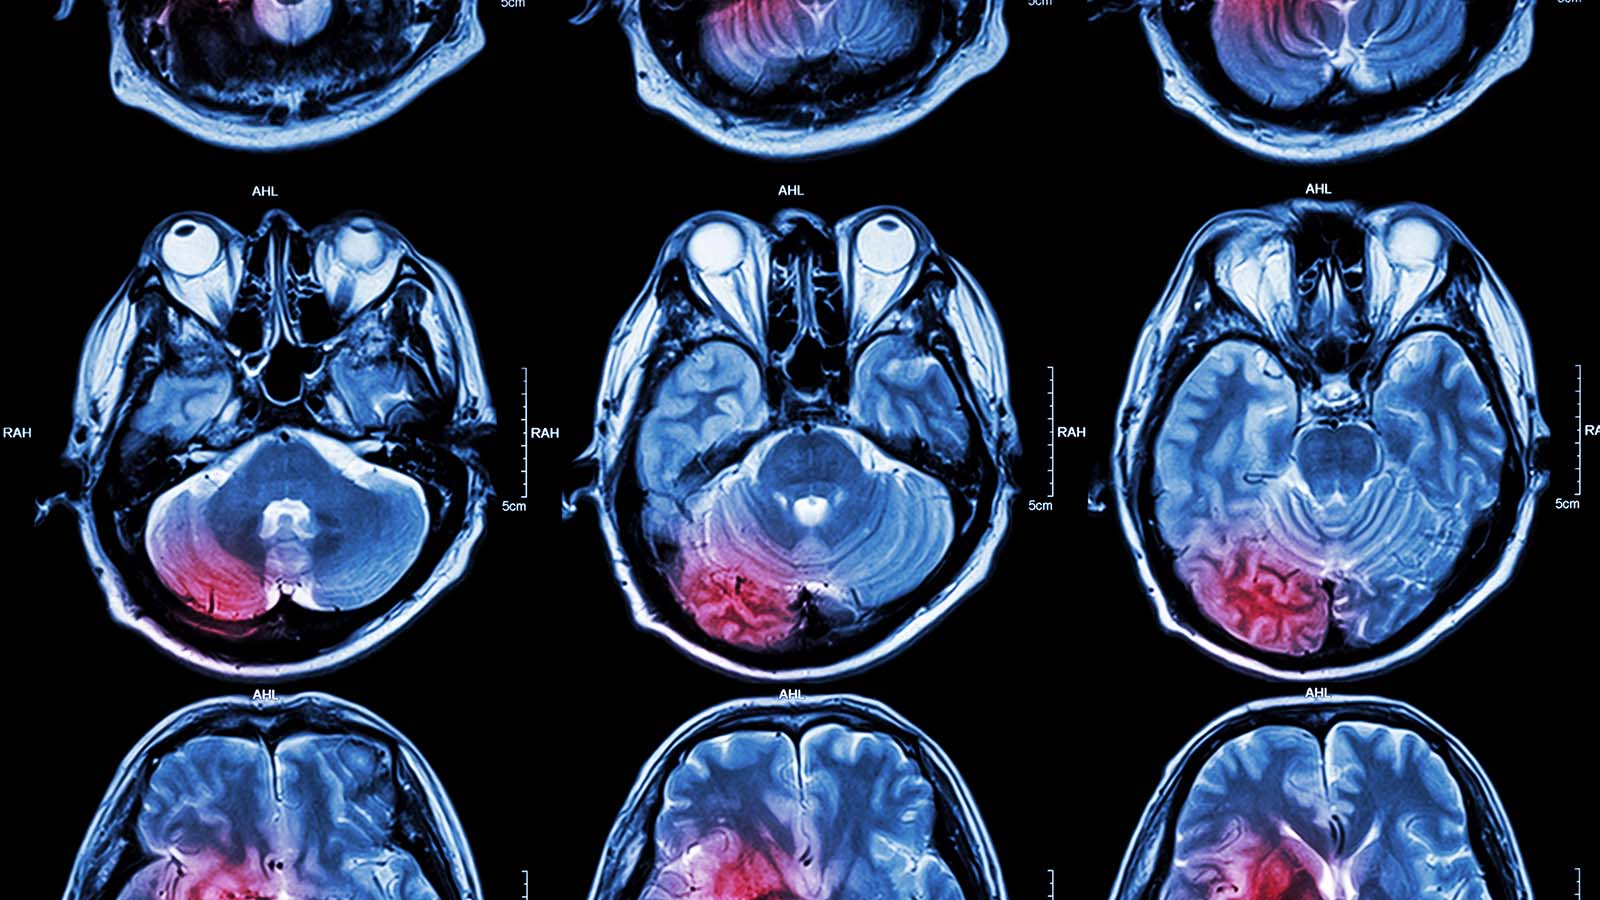 MRI scans of traumatic brain injuries